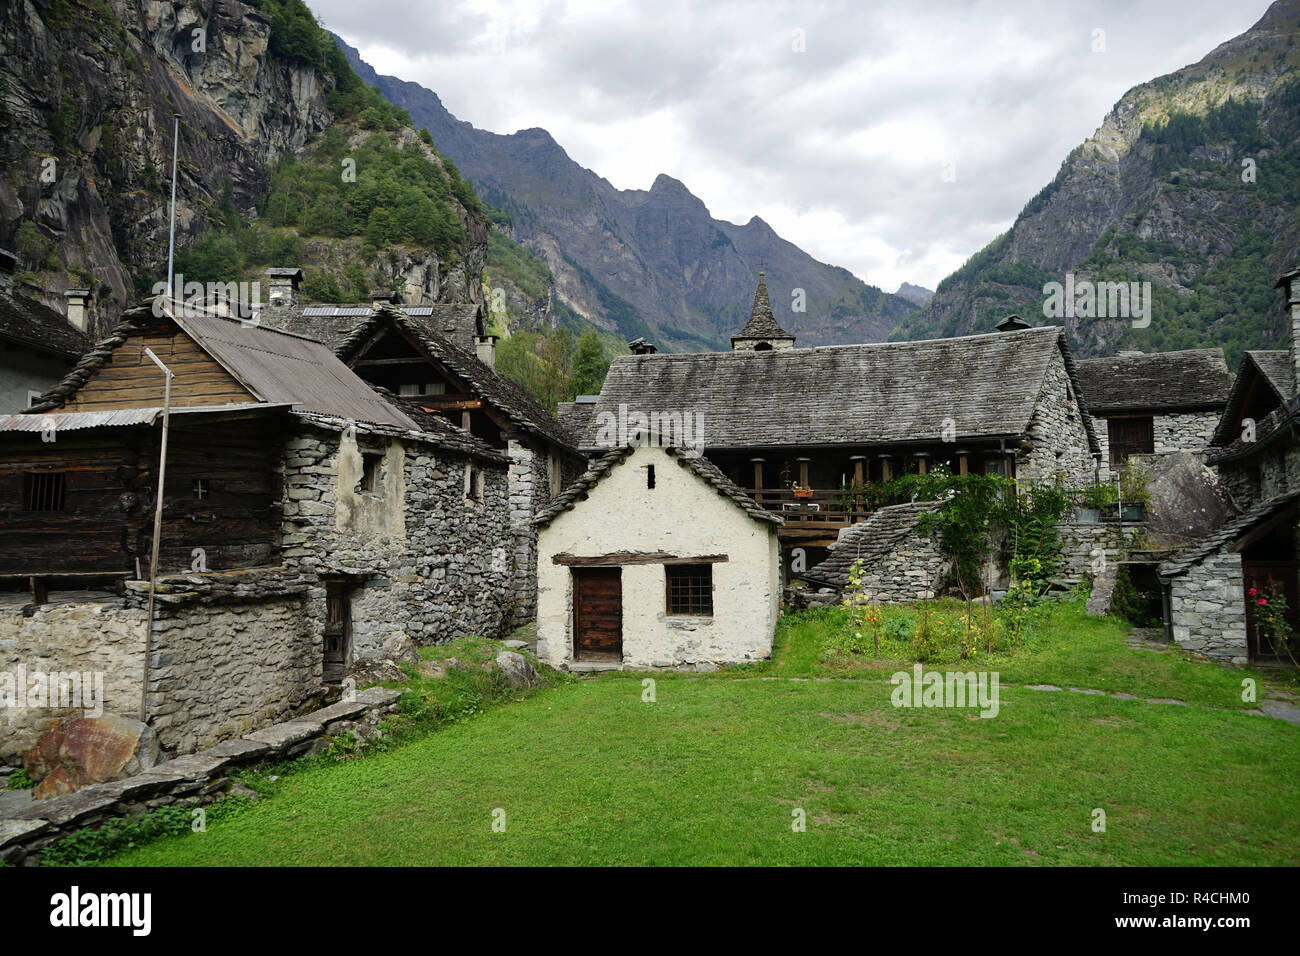 Traditional stone houses and old village Sonlerto, Val Bavona, Ticino, Switzerland Stock Photo